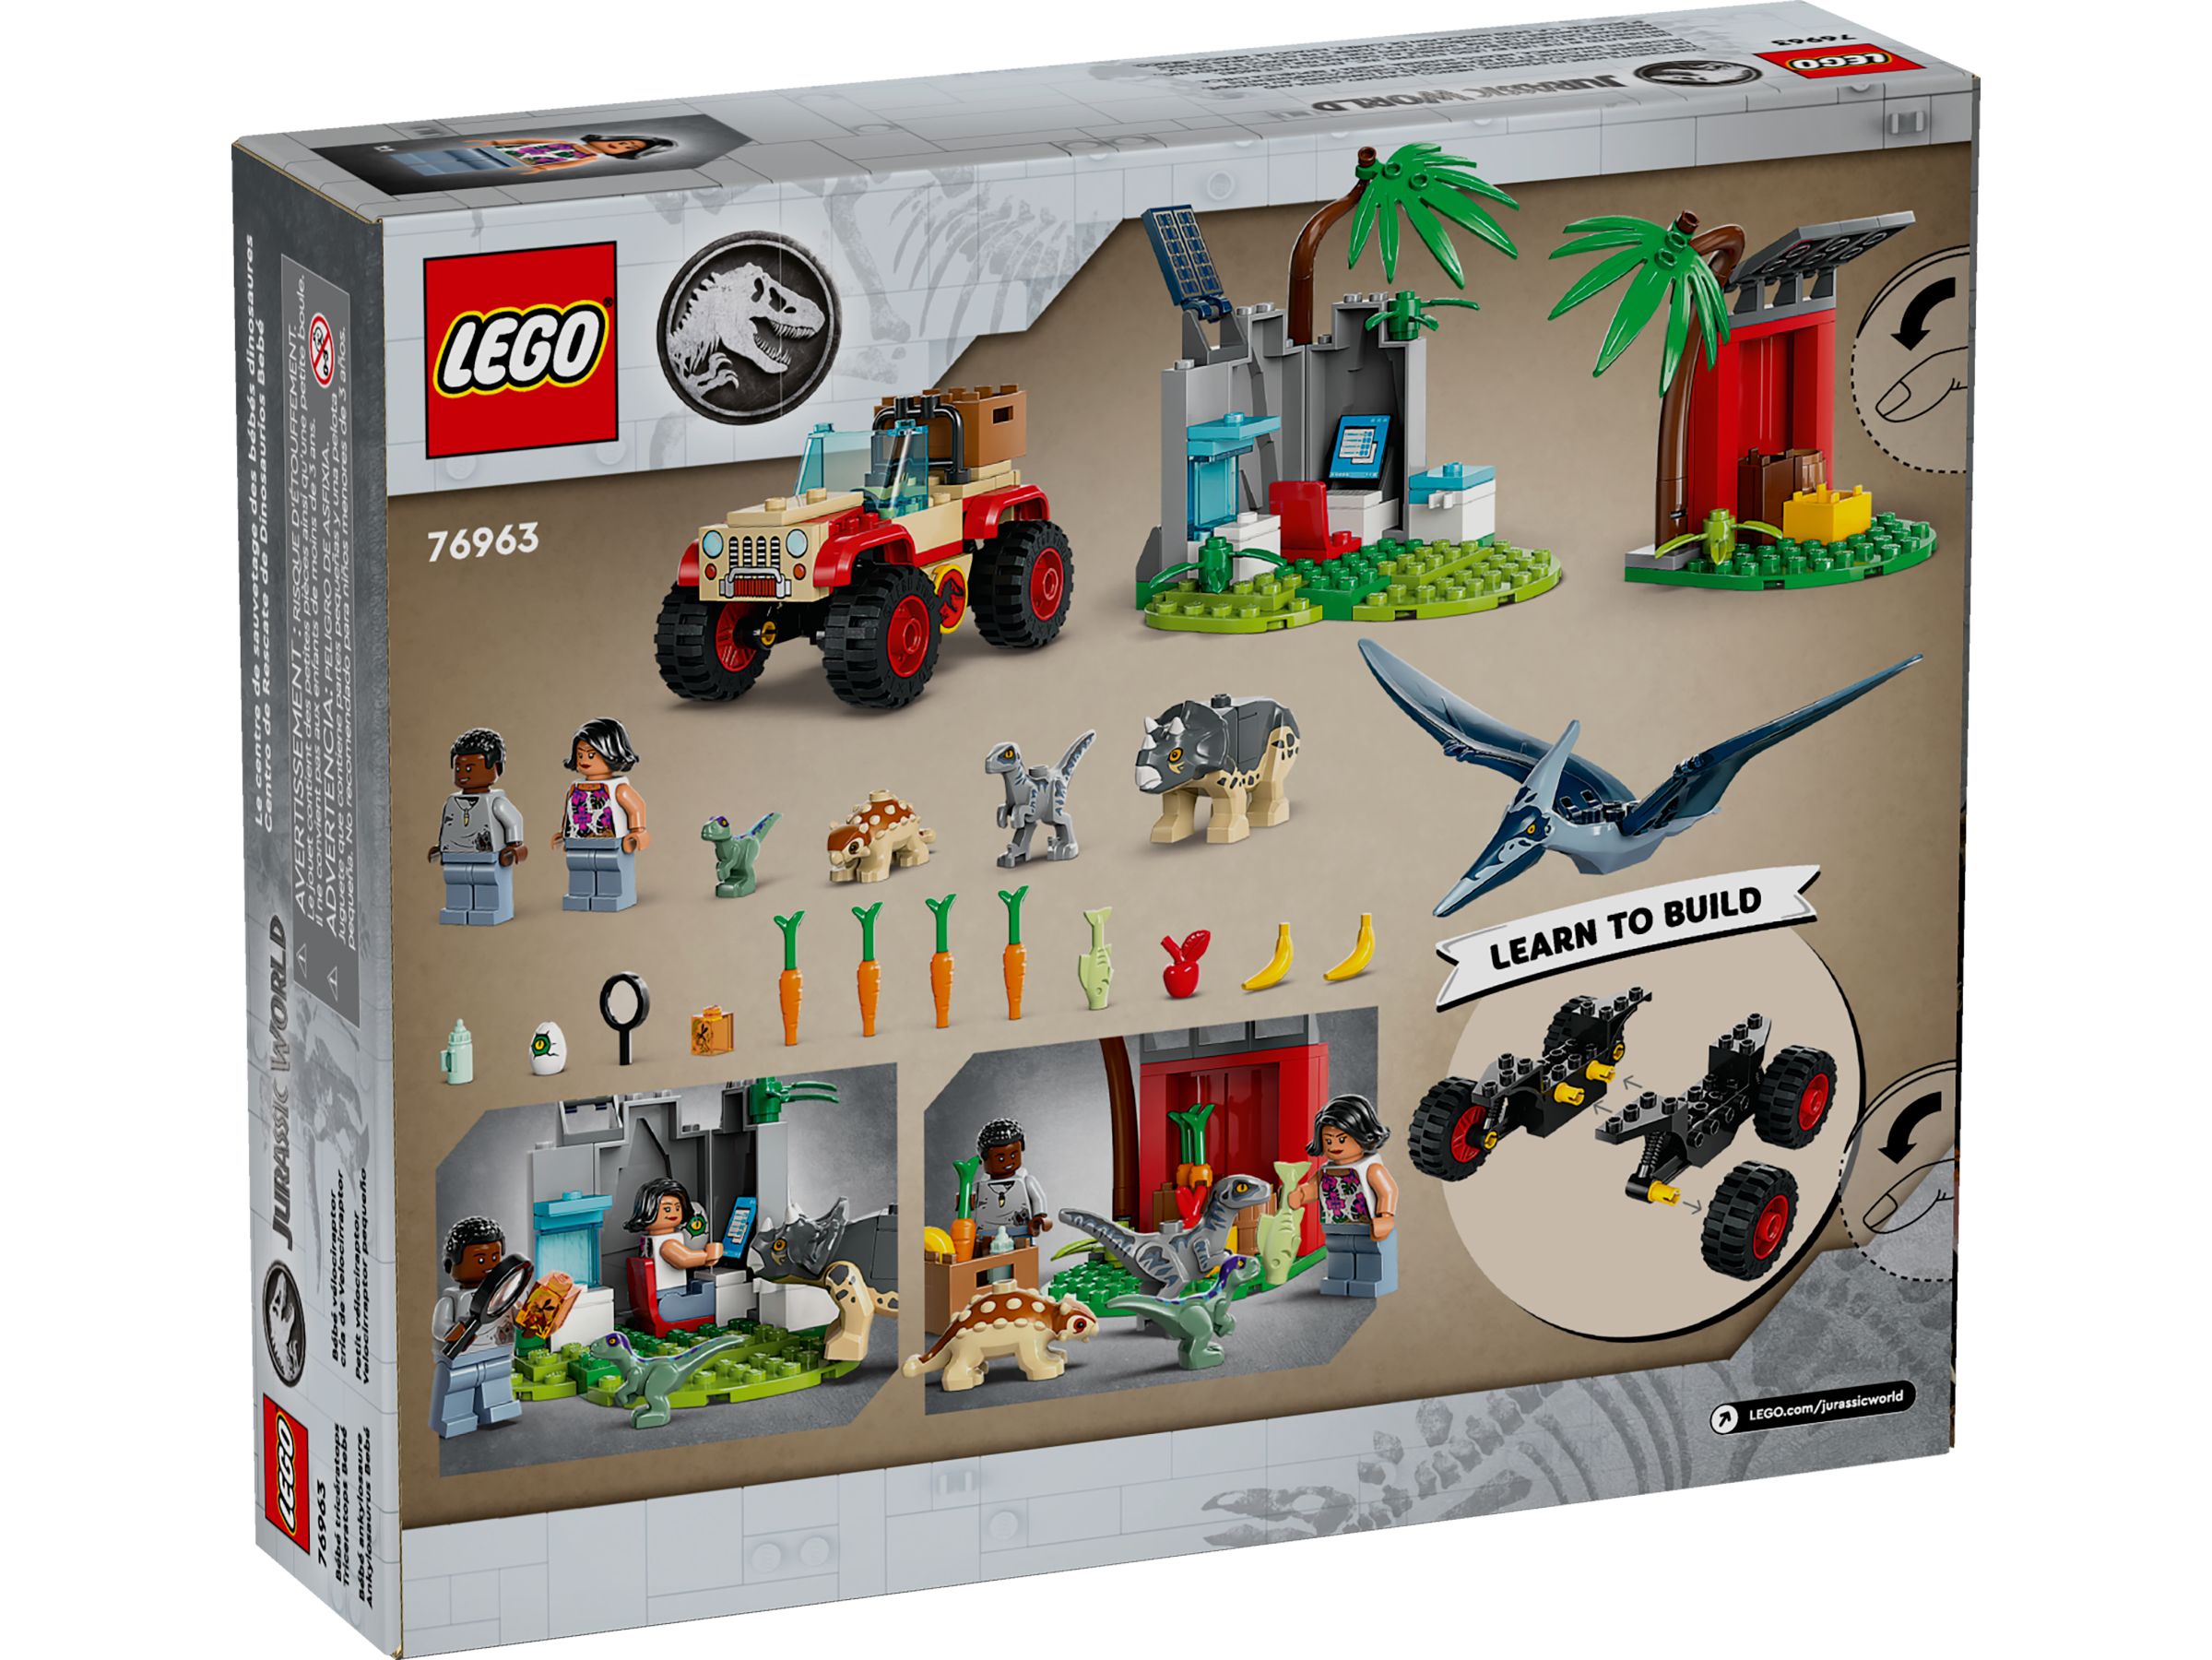 LEGO Jurassic World 76963 Rettungszentrum für Baby-Dinos LEGO_76963_Box5_v39.jpg